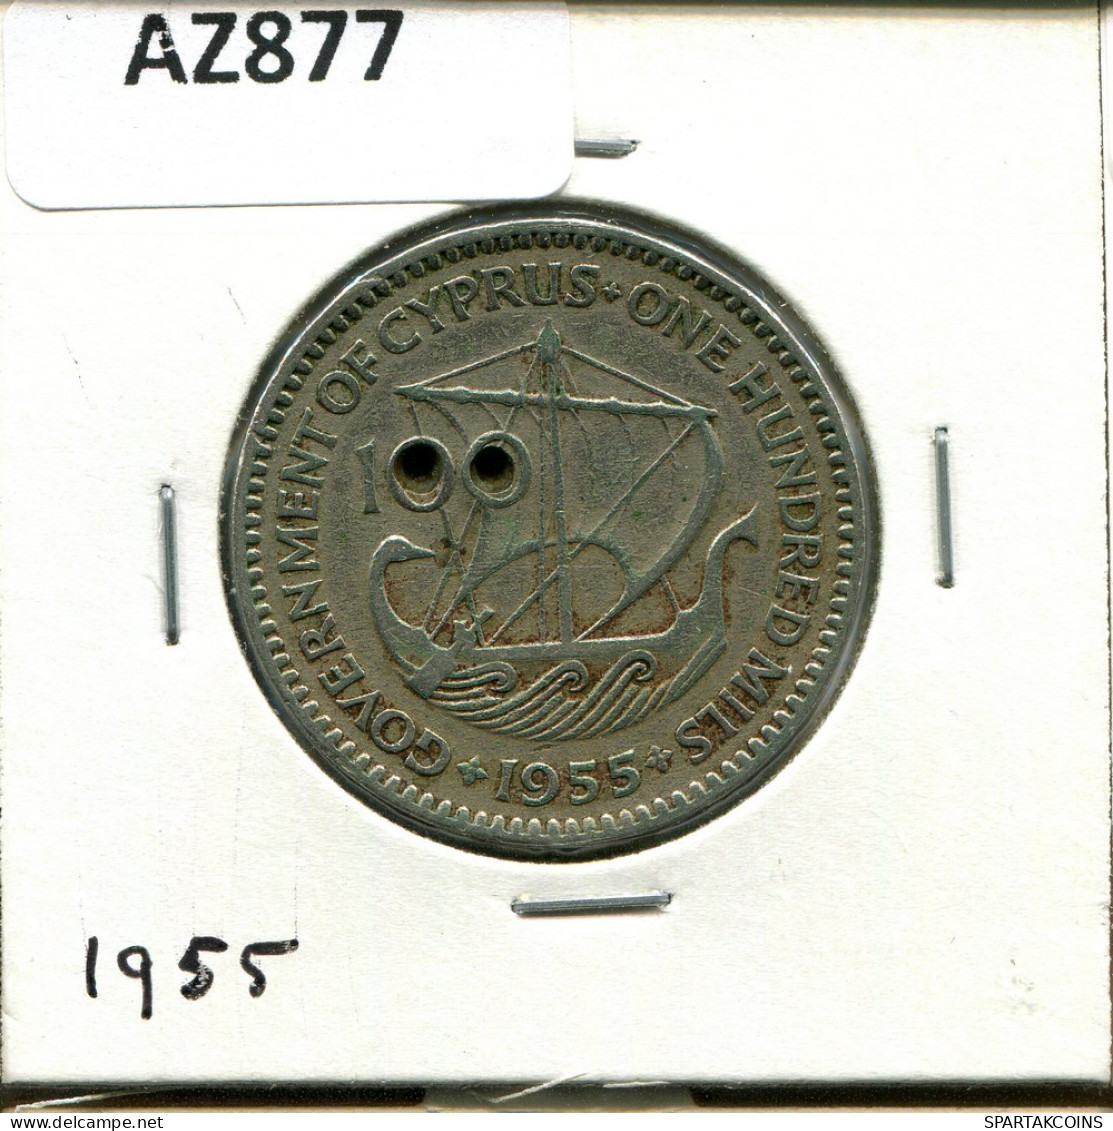 100 MILS 1955 CYPRUS Coin #AZ877.U.A - Chypre